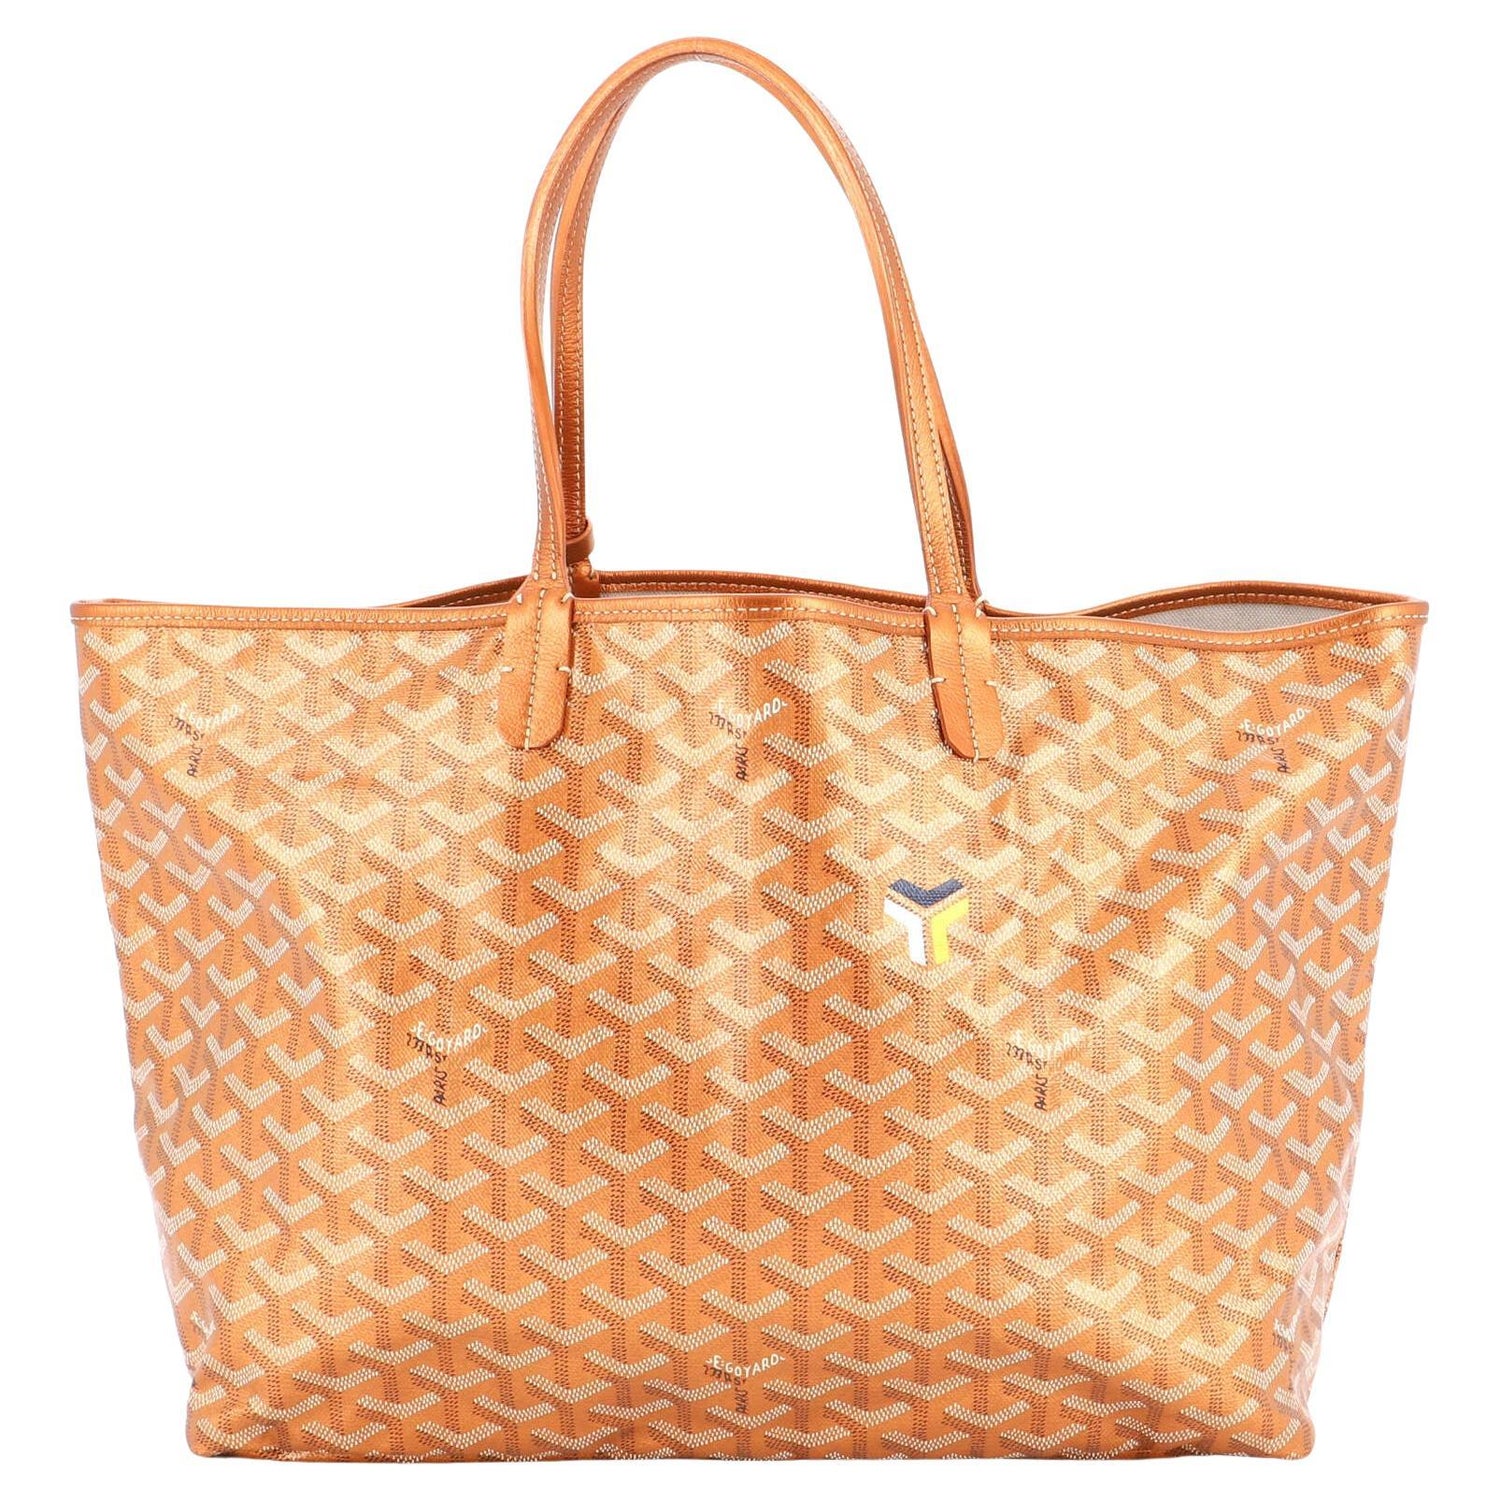 Goyard-saint-louis-bag-prices  Goyard bag, Goyard bag price, Goyard  handbags